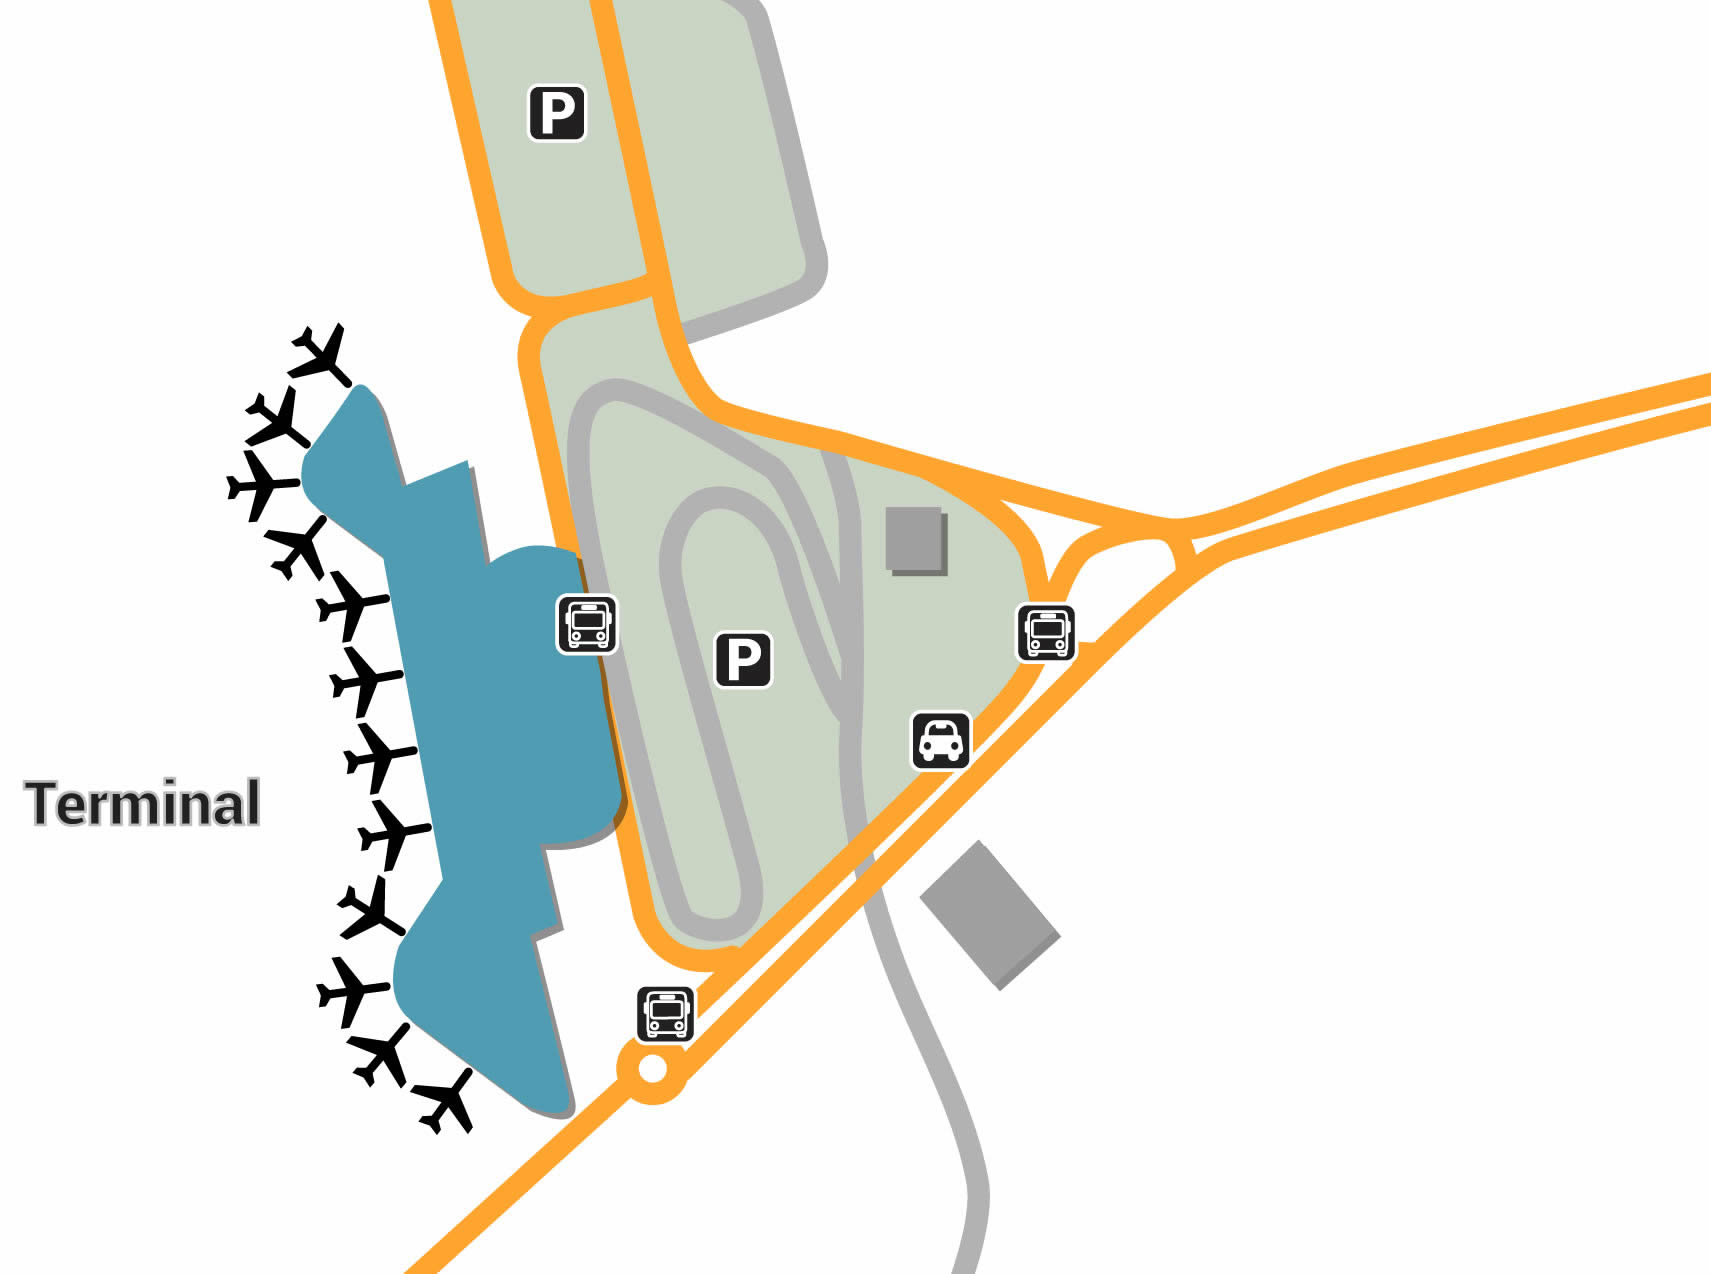 OPO airport terminals